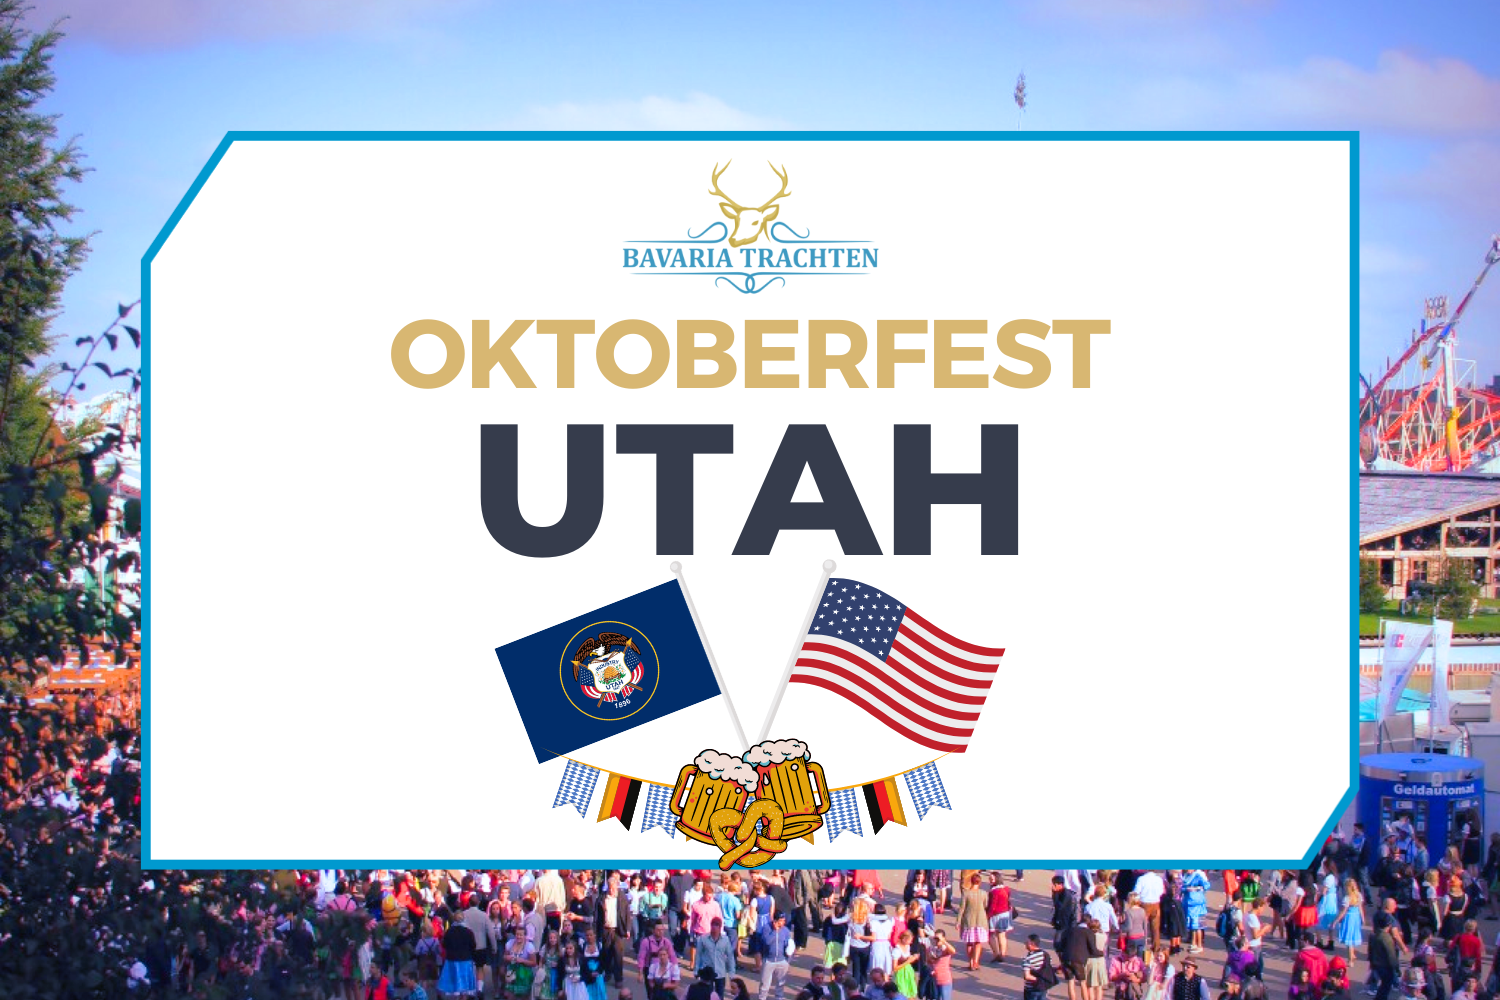 Oktoberfest Utah, USA